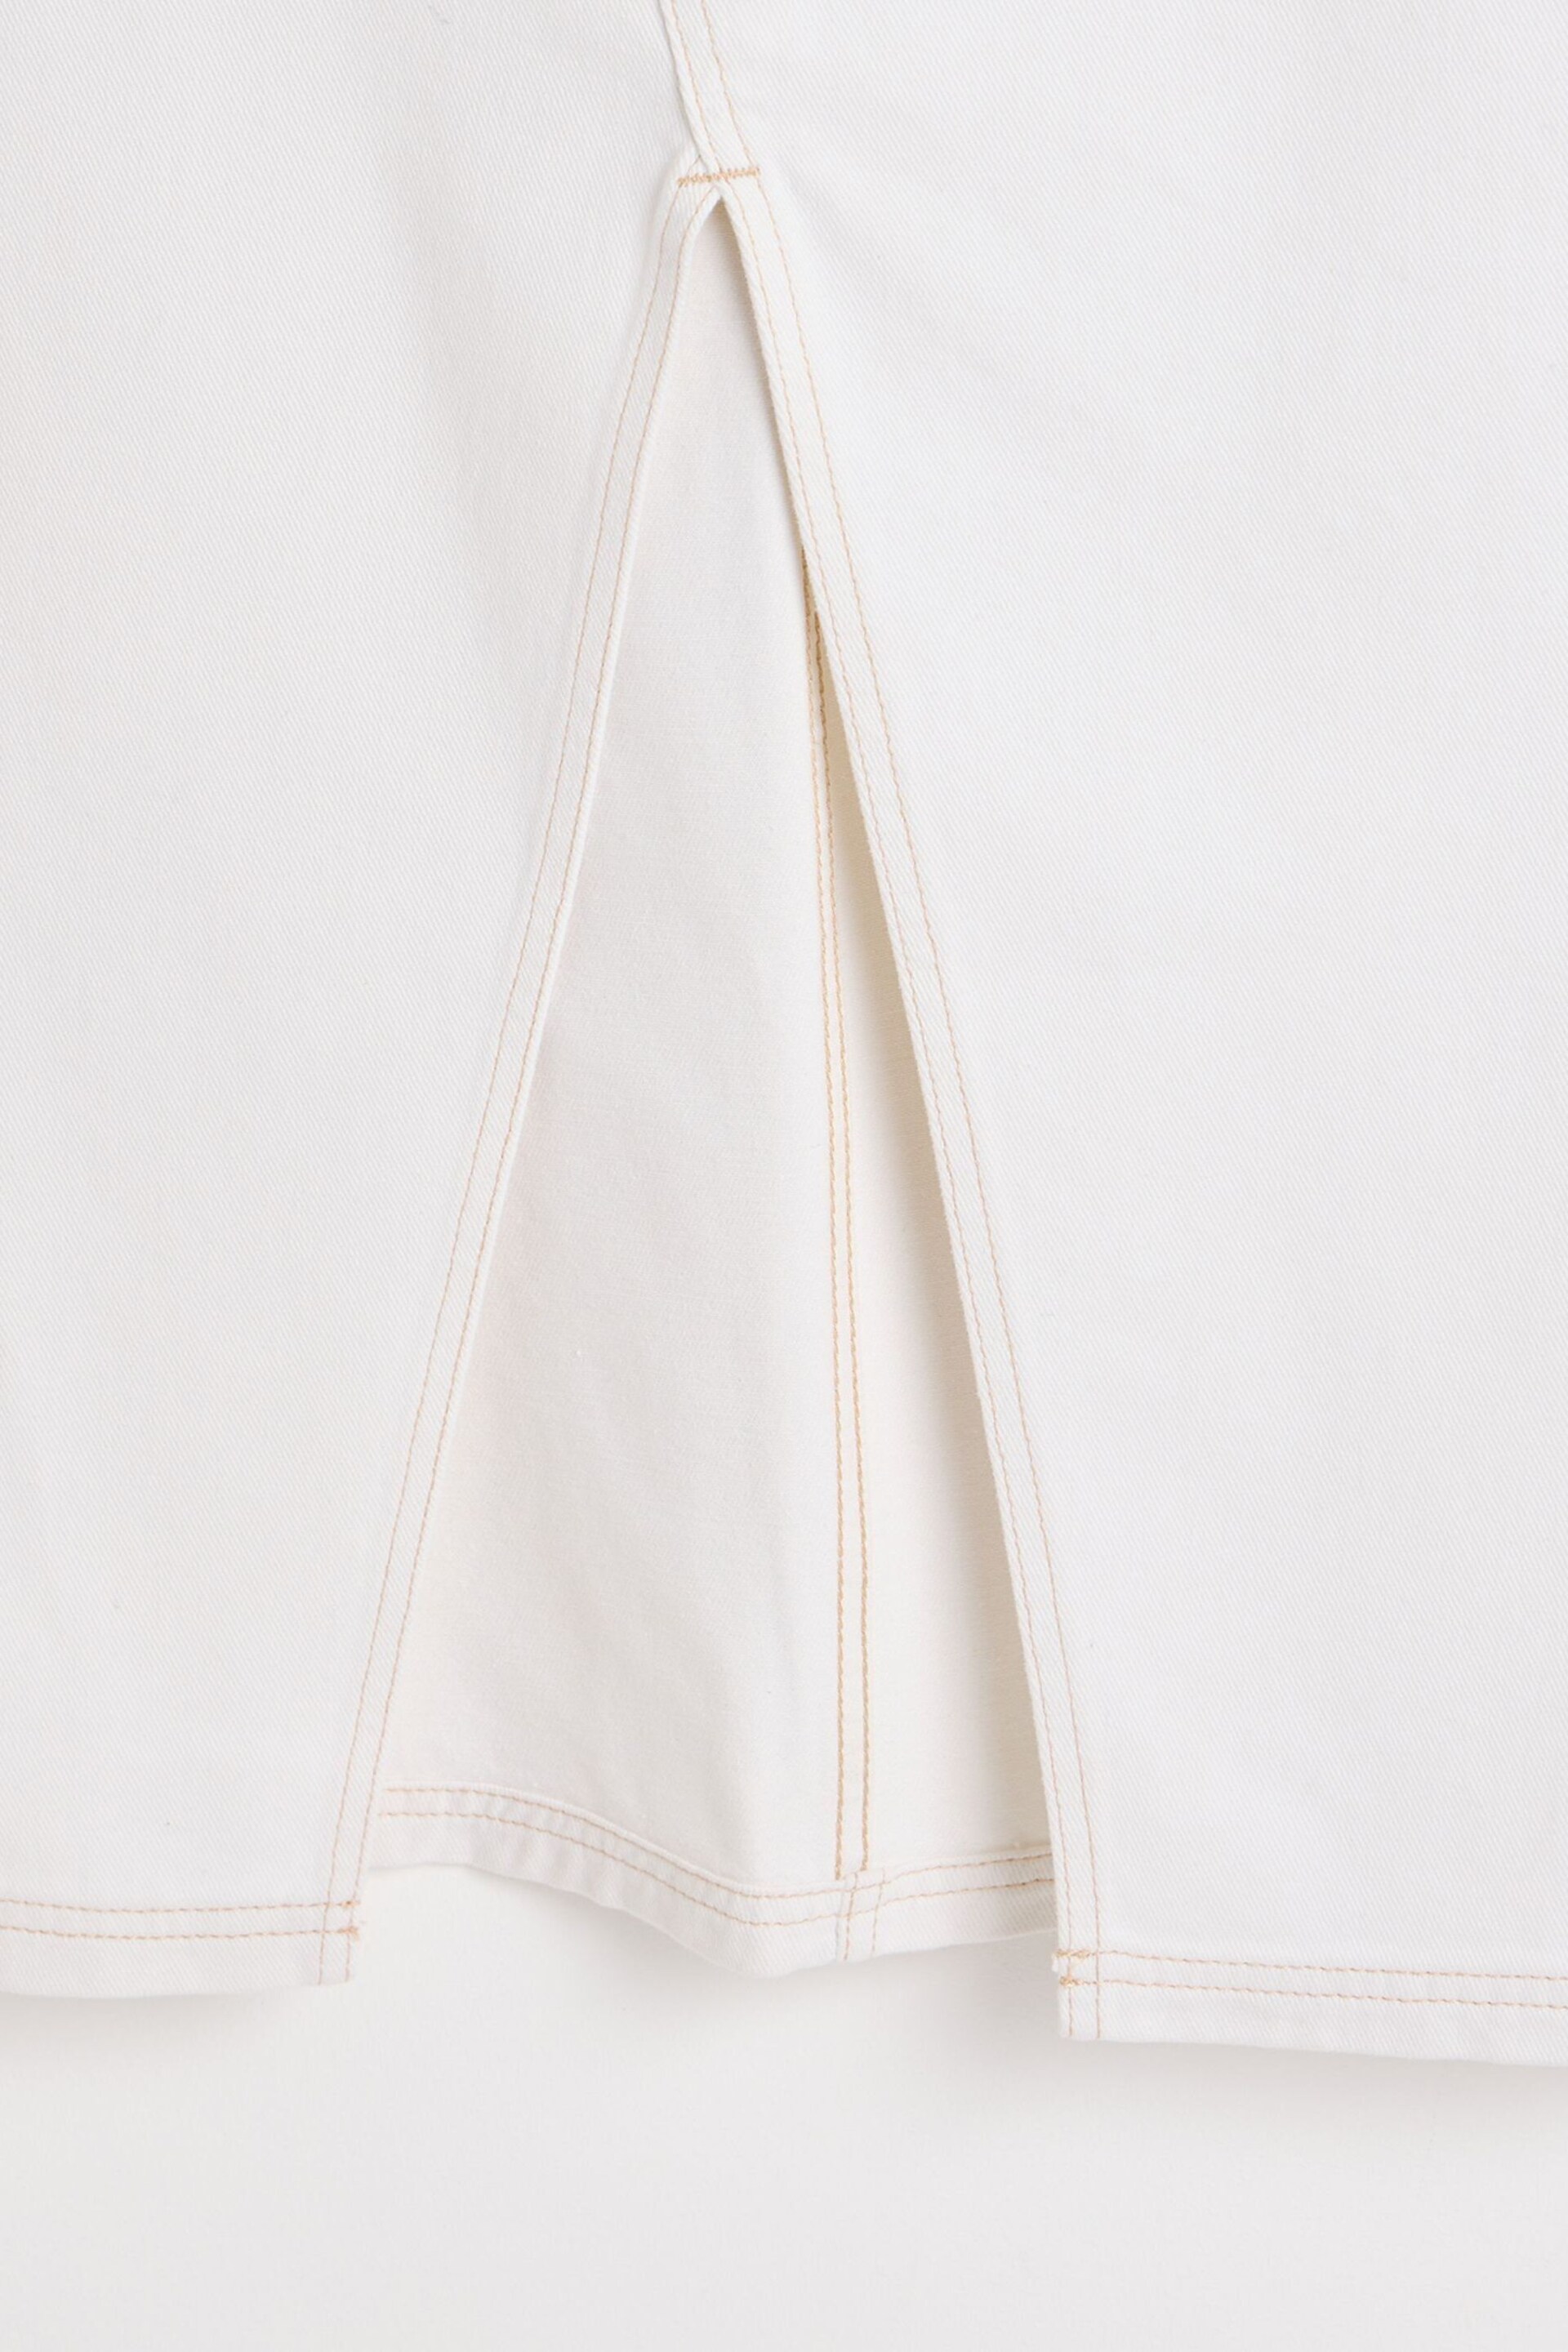 Oliver Bonas White Contrast Stitch Midi Skirt - Image 8 of 9